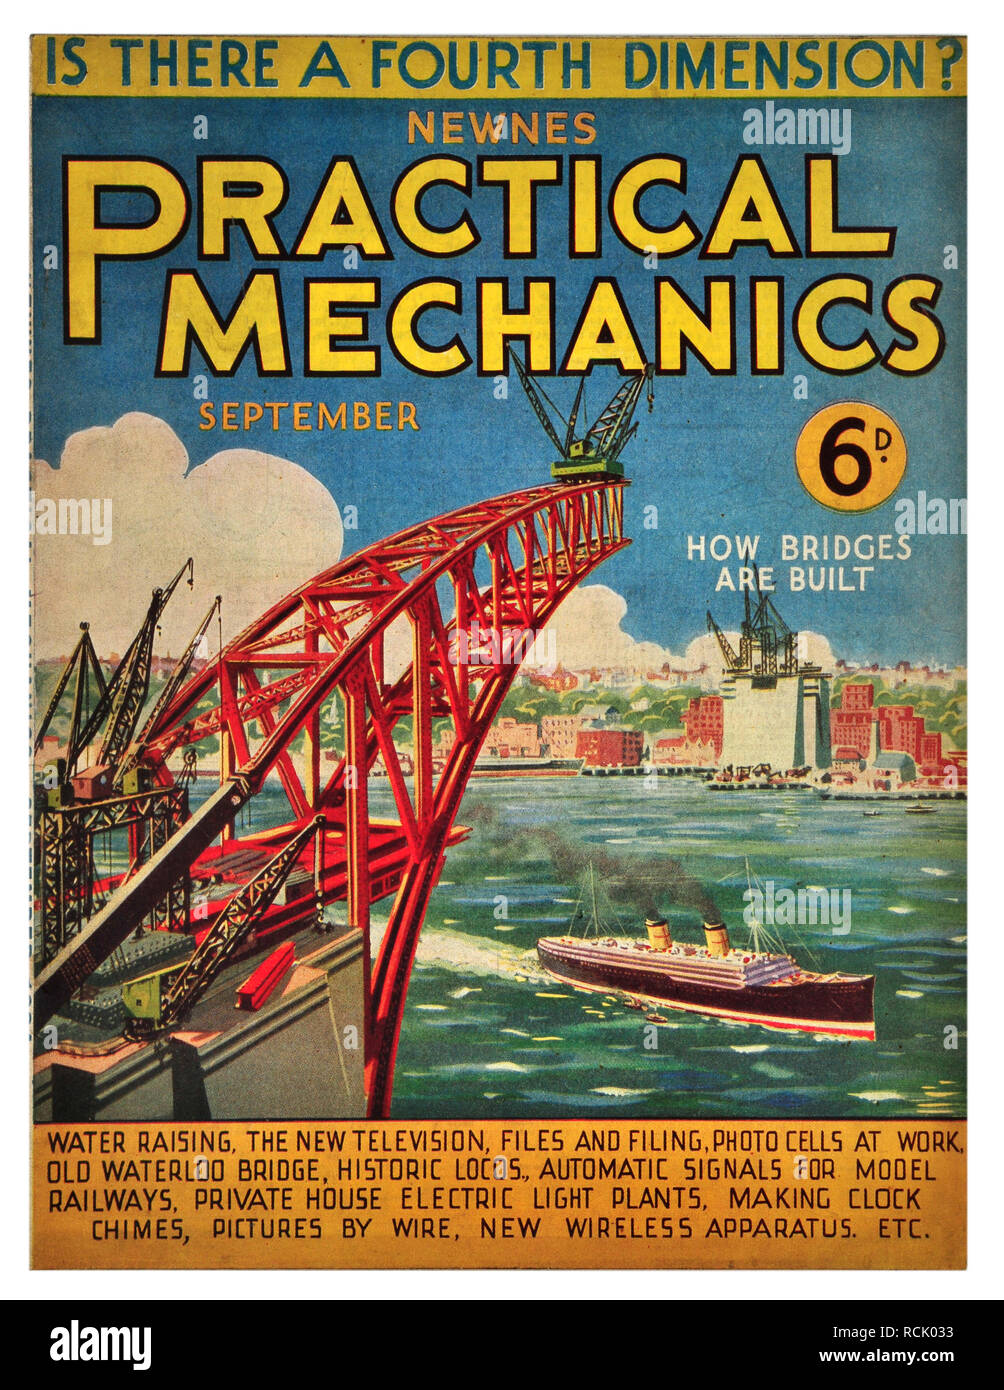 Newnes practical mechanics September costing 6D How Bridges are built Stock Photo